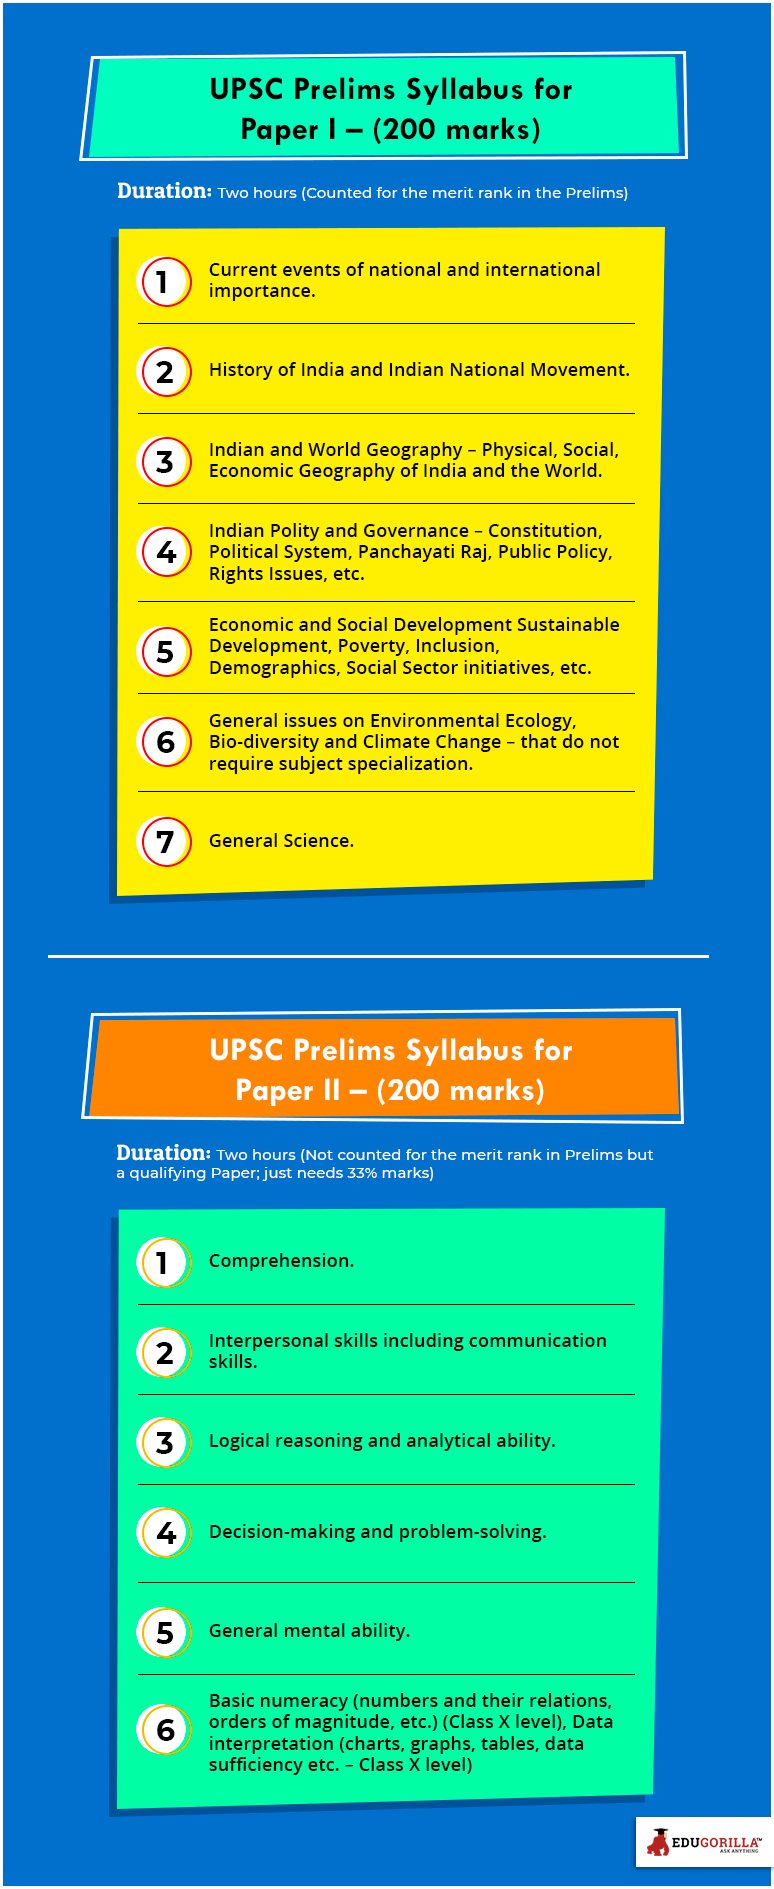 UPSC Prelims Syllabus for Paper 1- (200 marks)